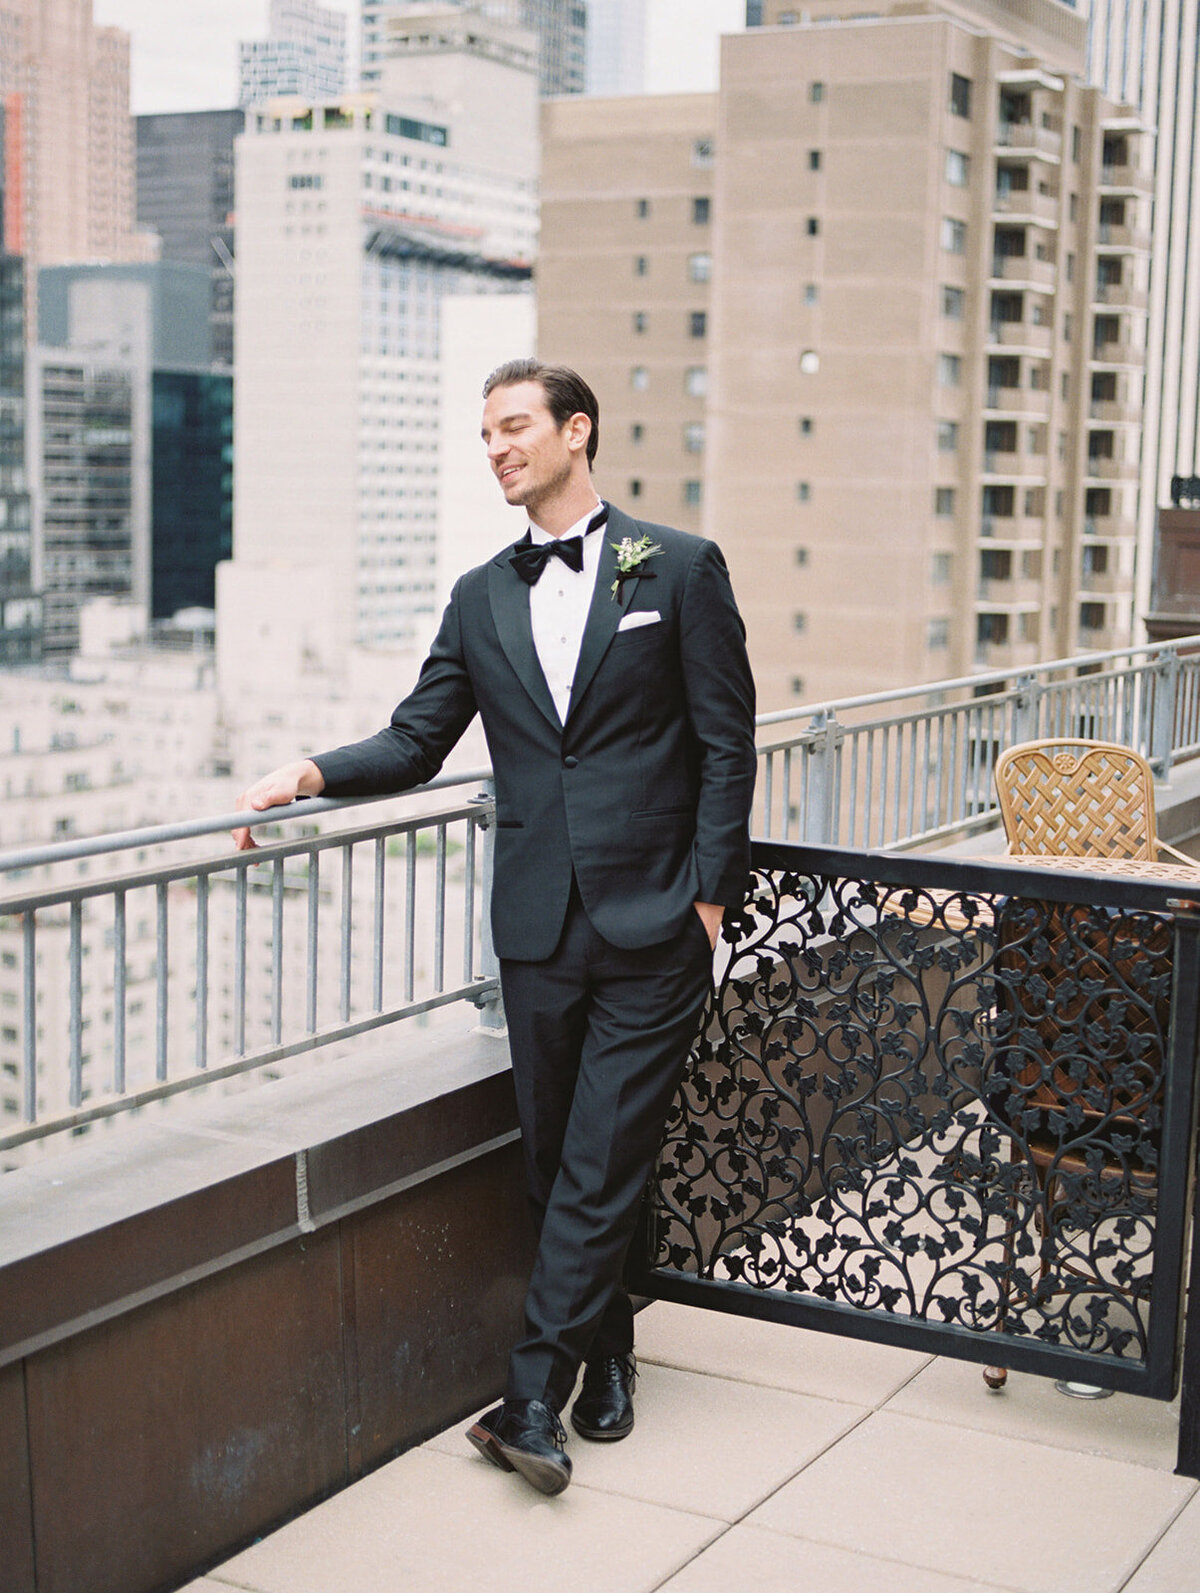 The Plaza Hotel - New York City - Elopement Wedding - Stephanie Michelle Photography - _stephaniemichellephotog - 38-R1-E013